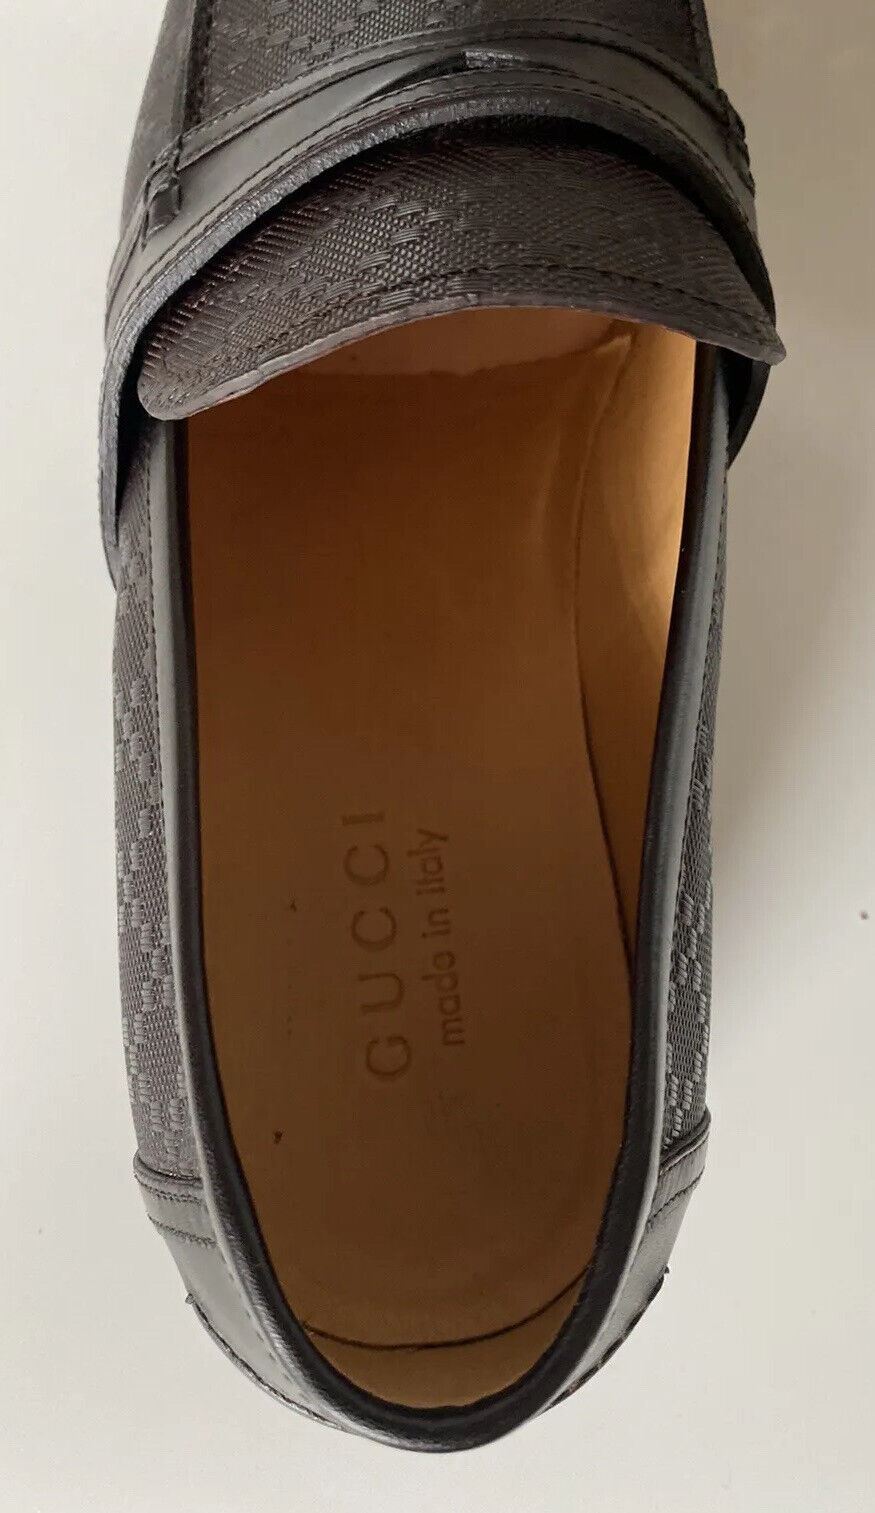 NIB Gucci Herren Diamante Leder Loafers Schuhe Braun 9,5 US (Gucci 8,5) 245583 